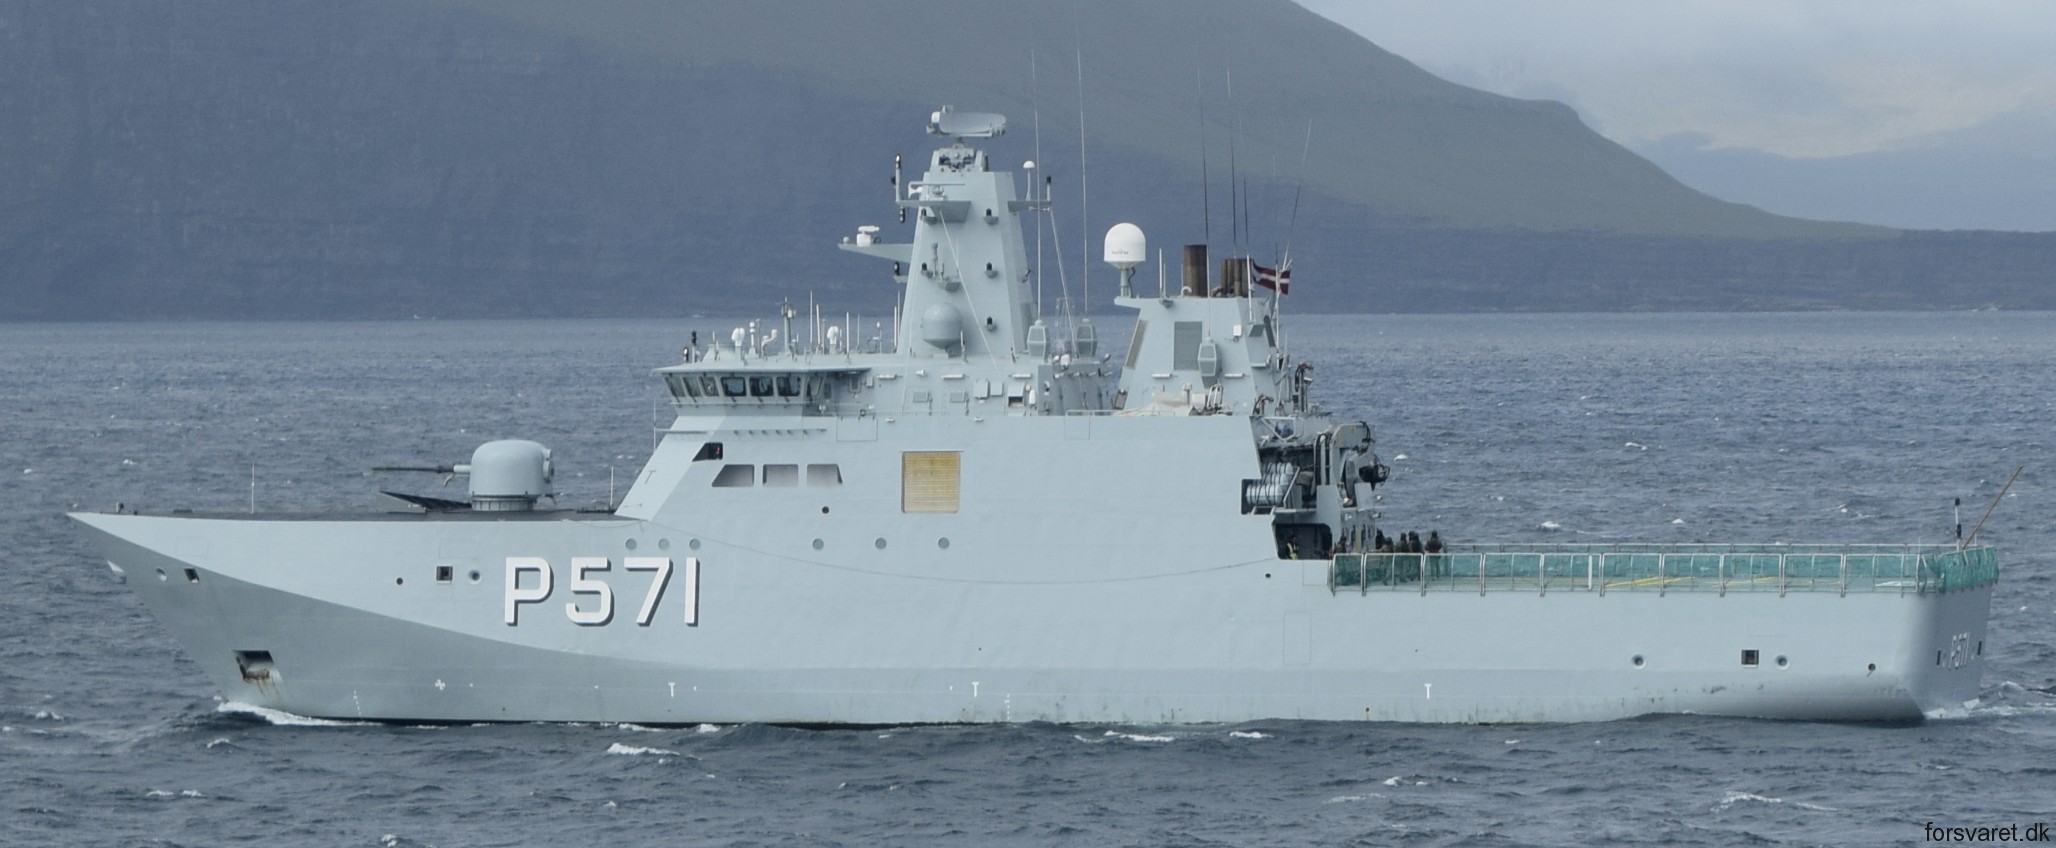 p-571 hdms ejnar mikkelsen knud rasmussen class offshore patrol vessel opv royal danish navy inspektionsfartøj 04